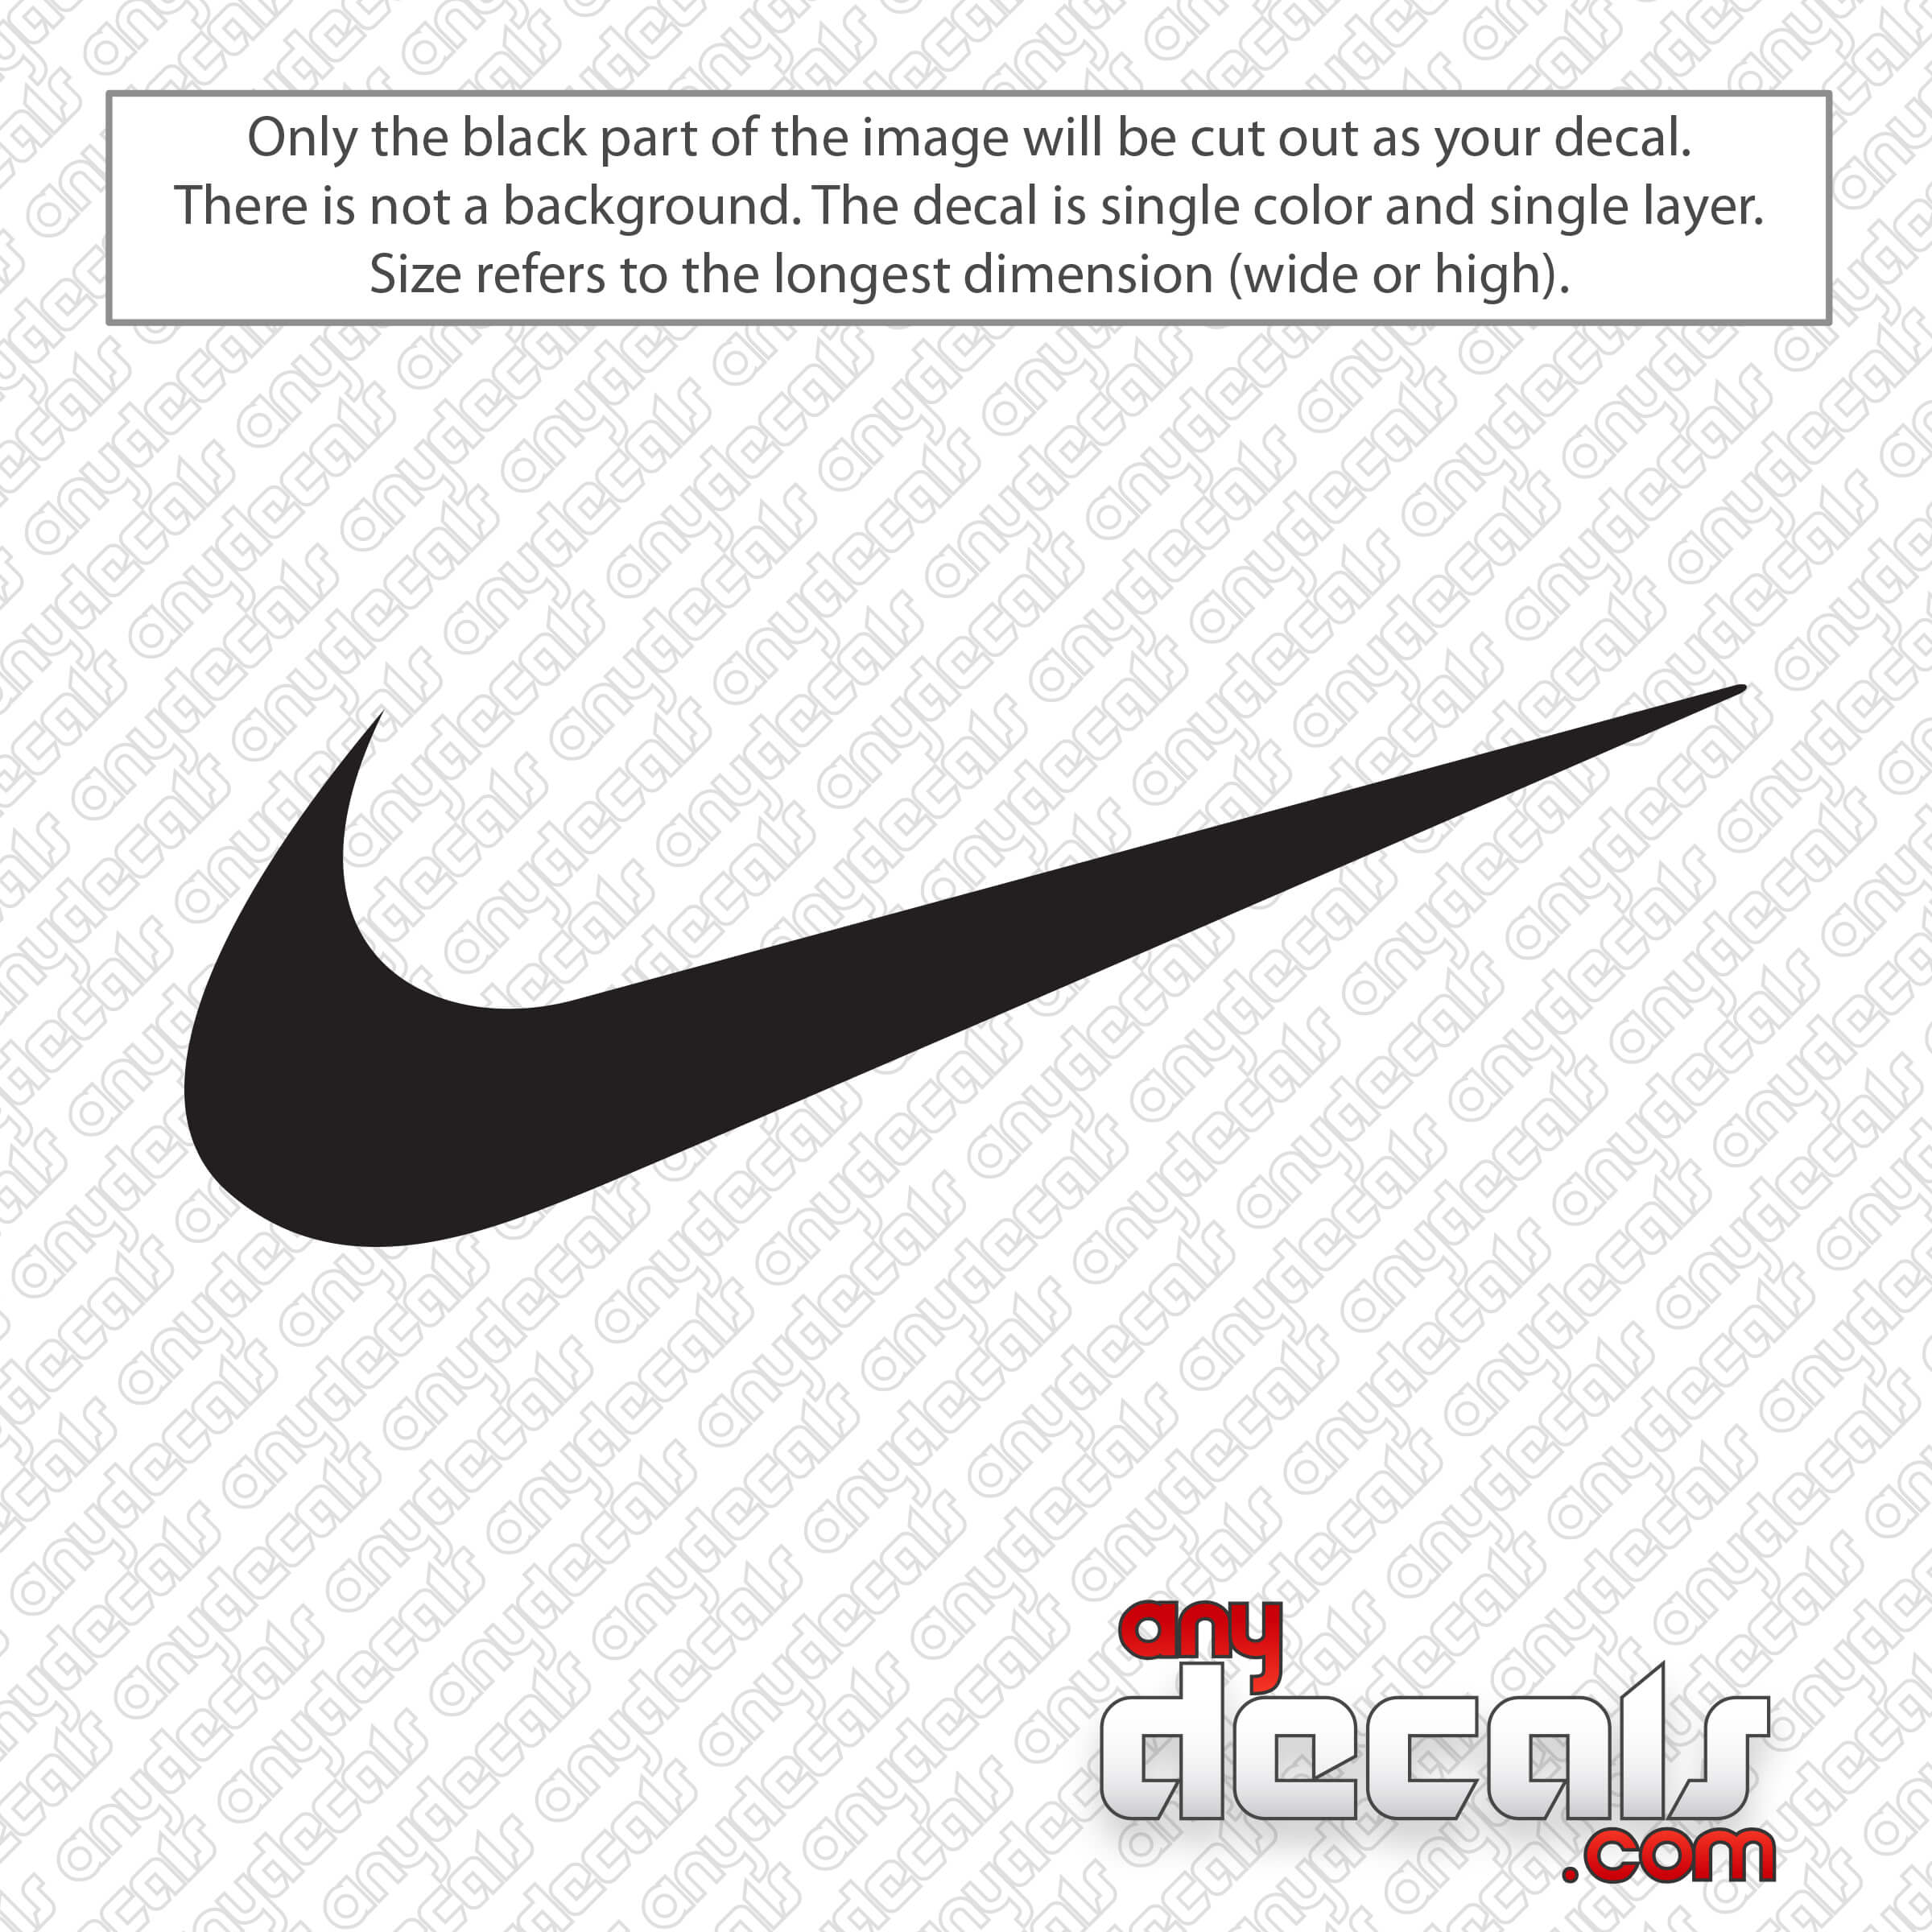 File:Nike swoosh logo71.png - Wikipedia